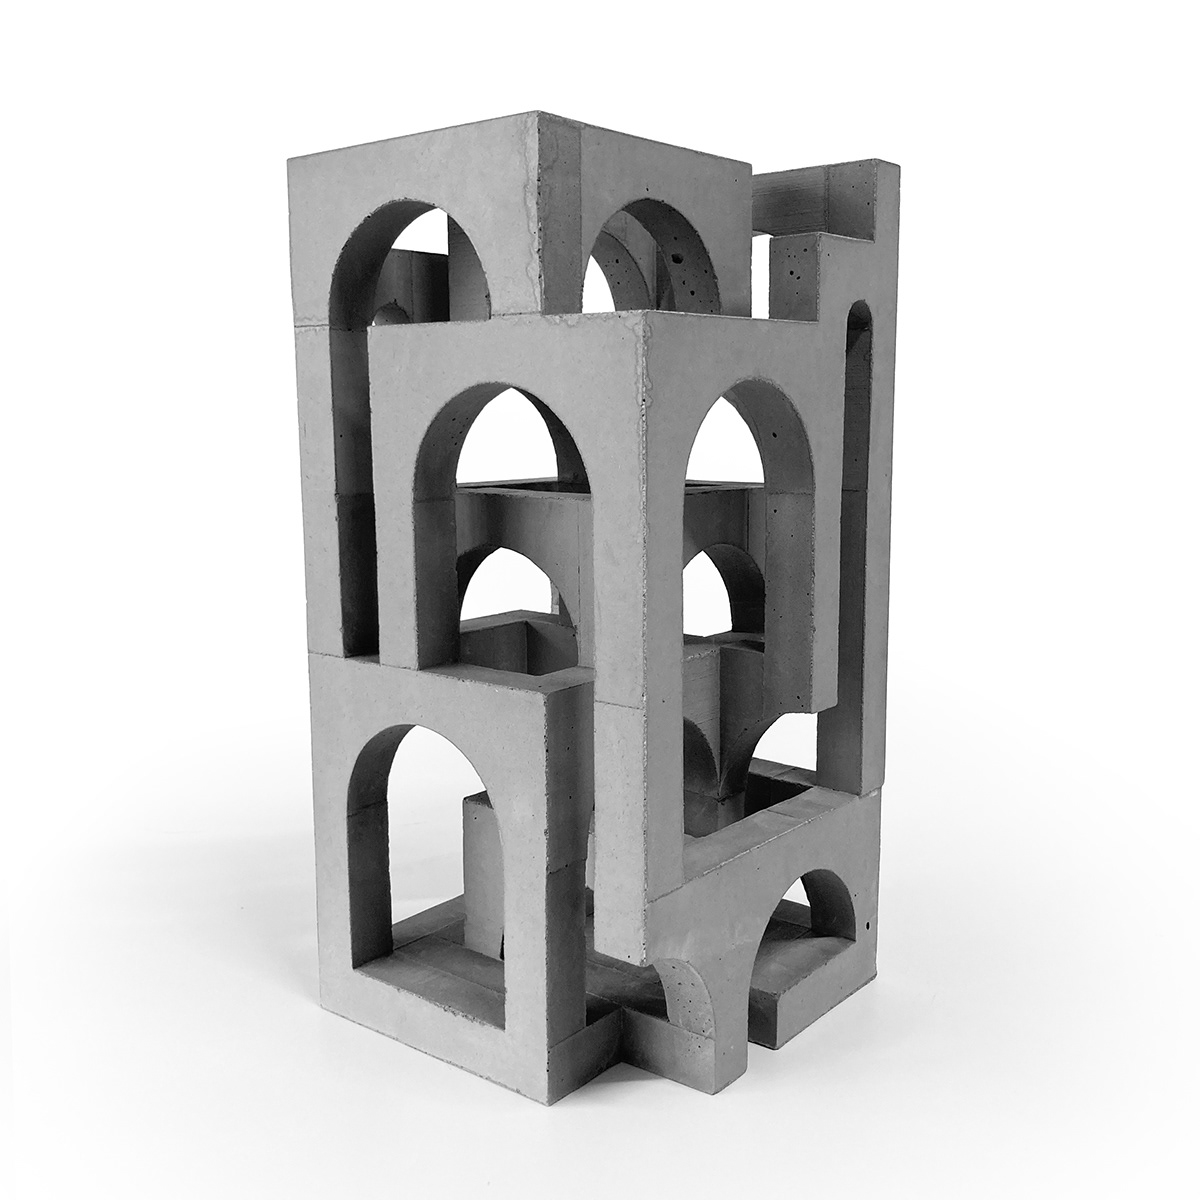 3D Arc arches architecture artwork Brutalism Brutalist chirico model sculpture